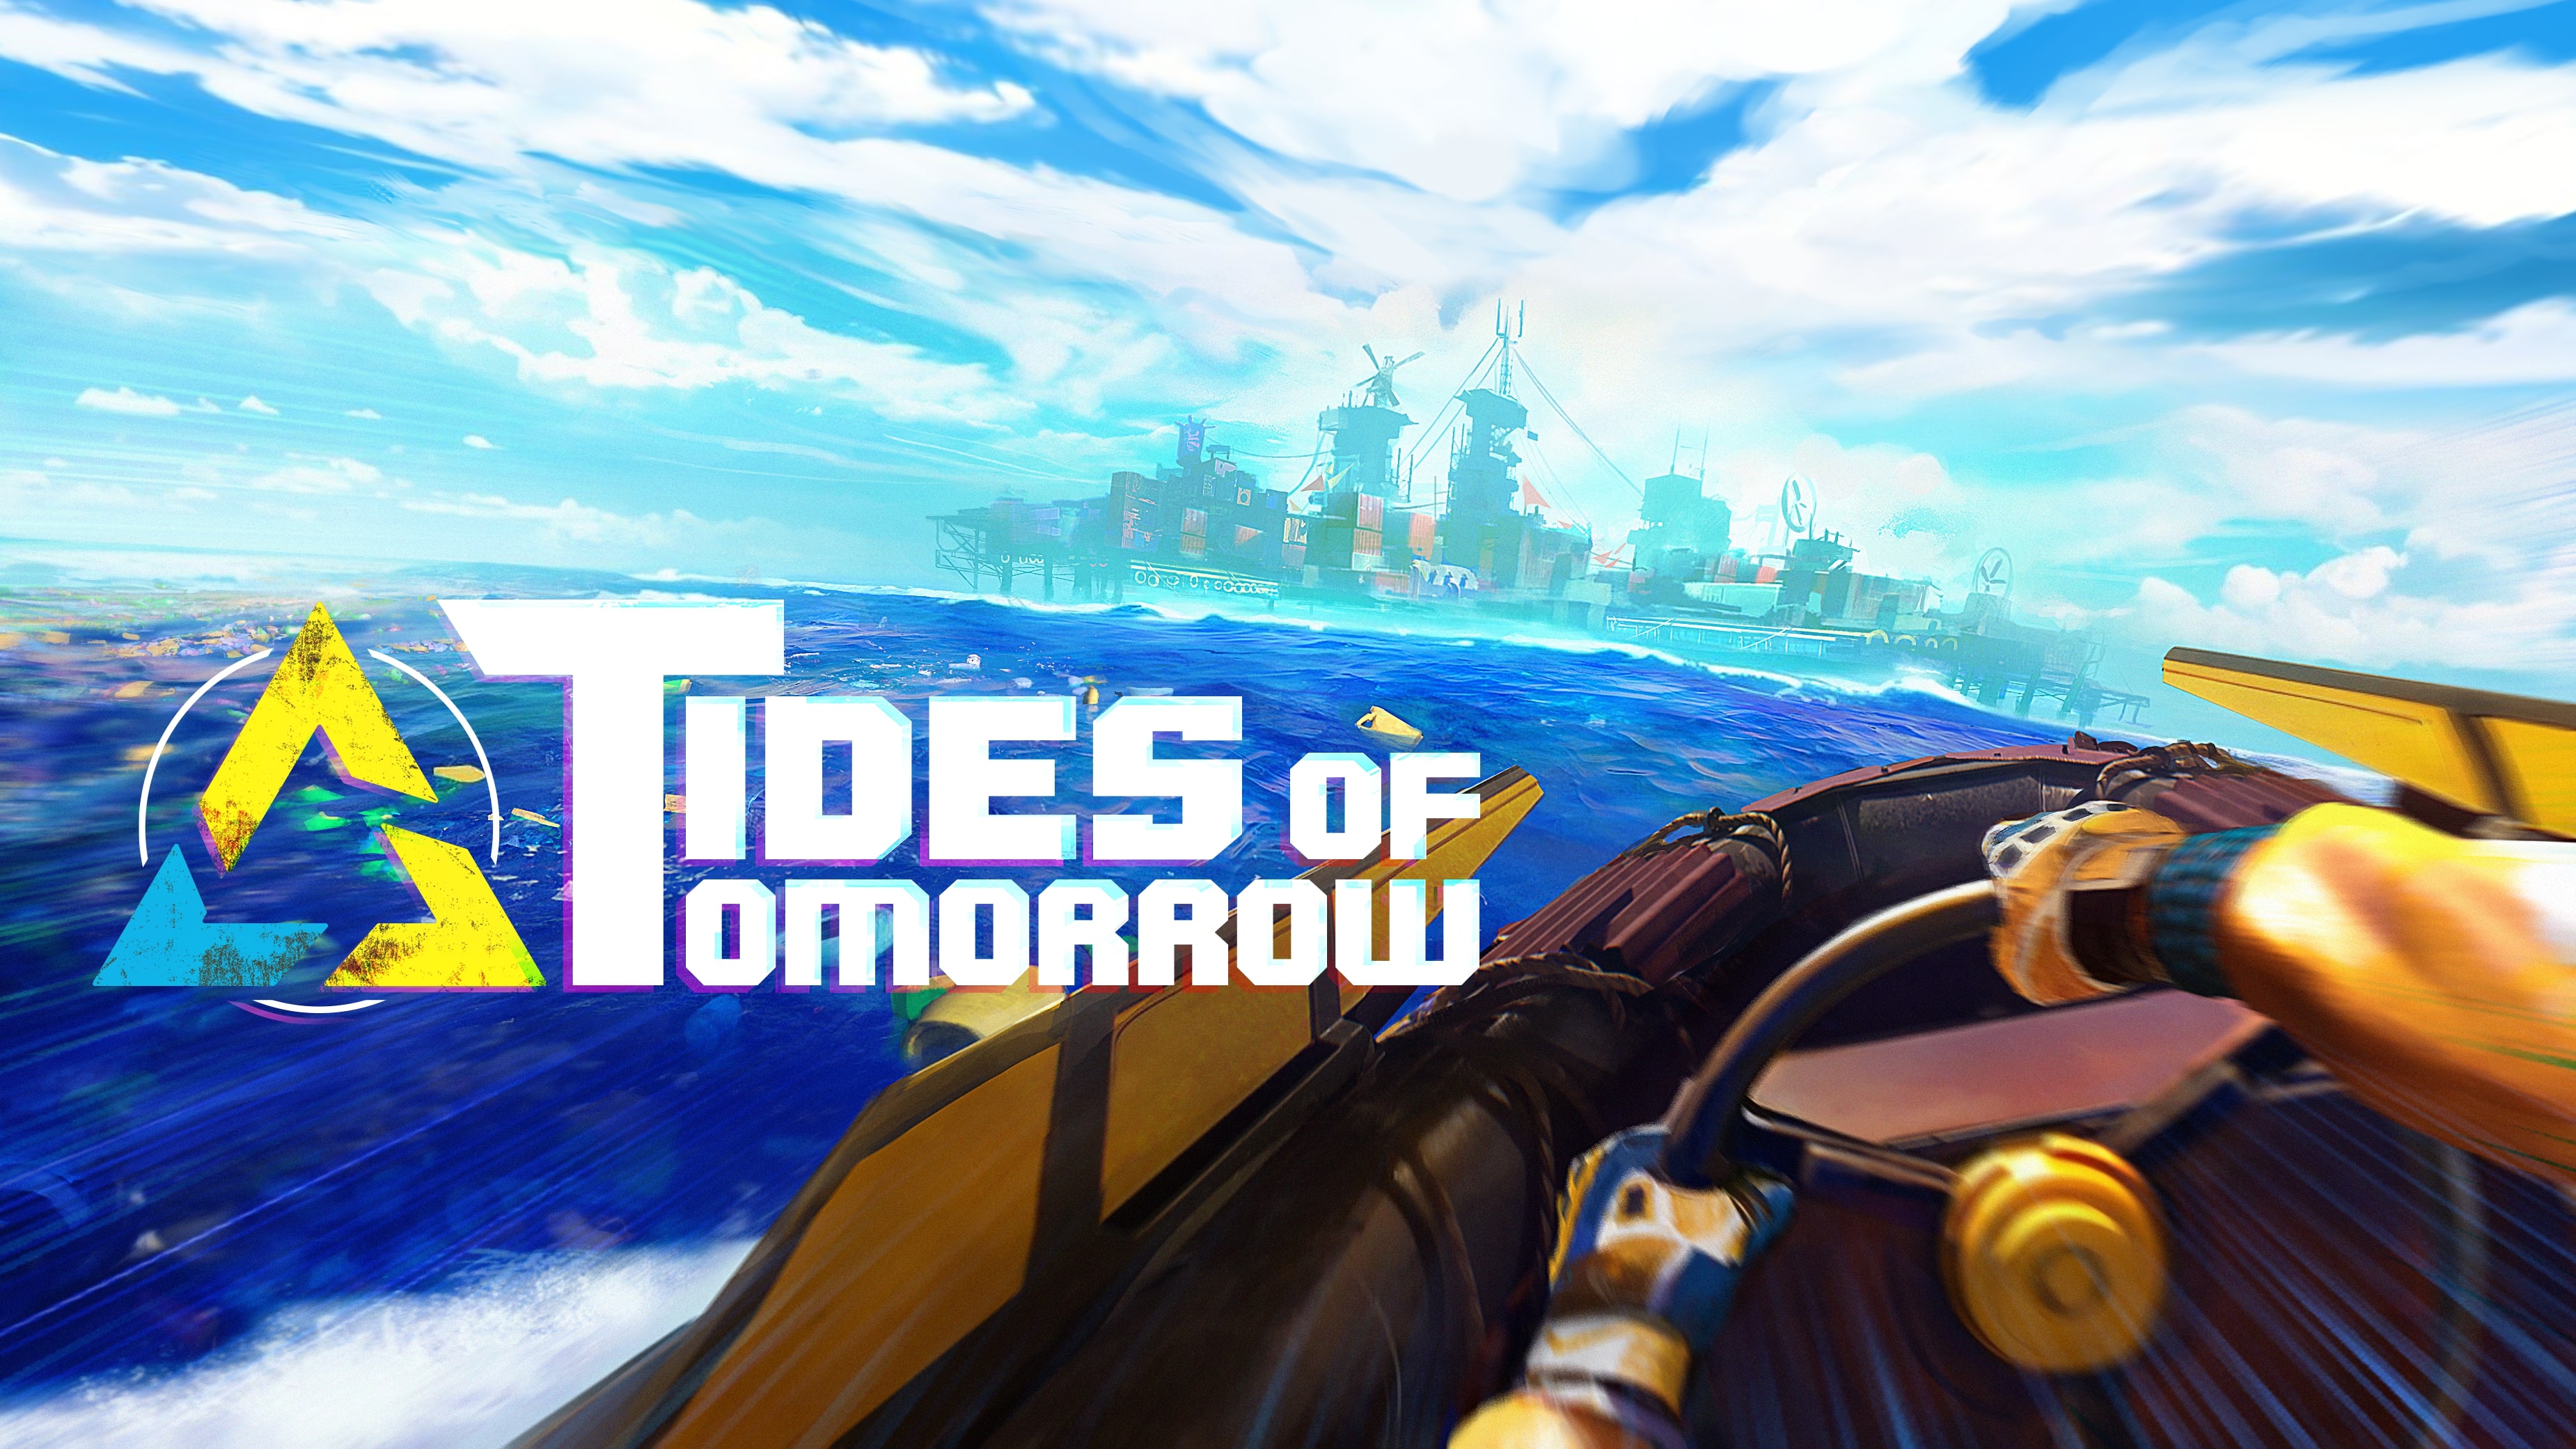 Tides of tomorrow screenshots 6 5